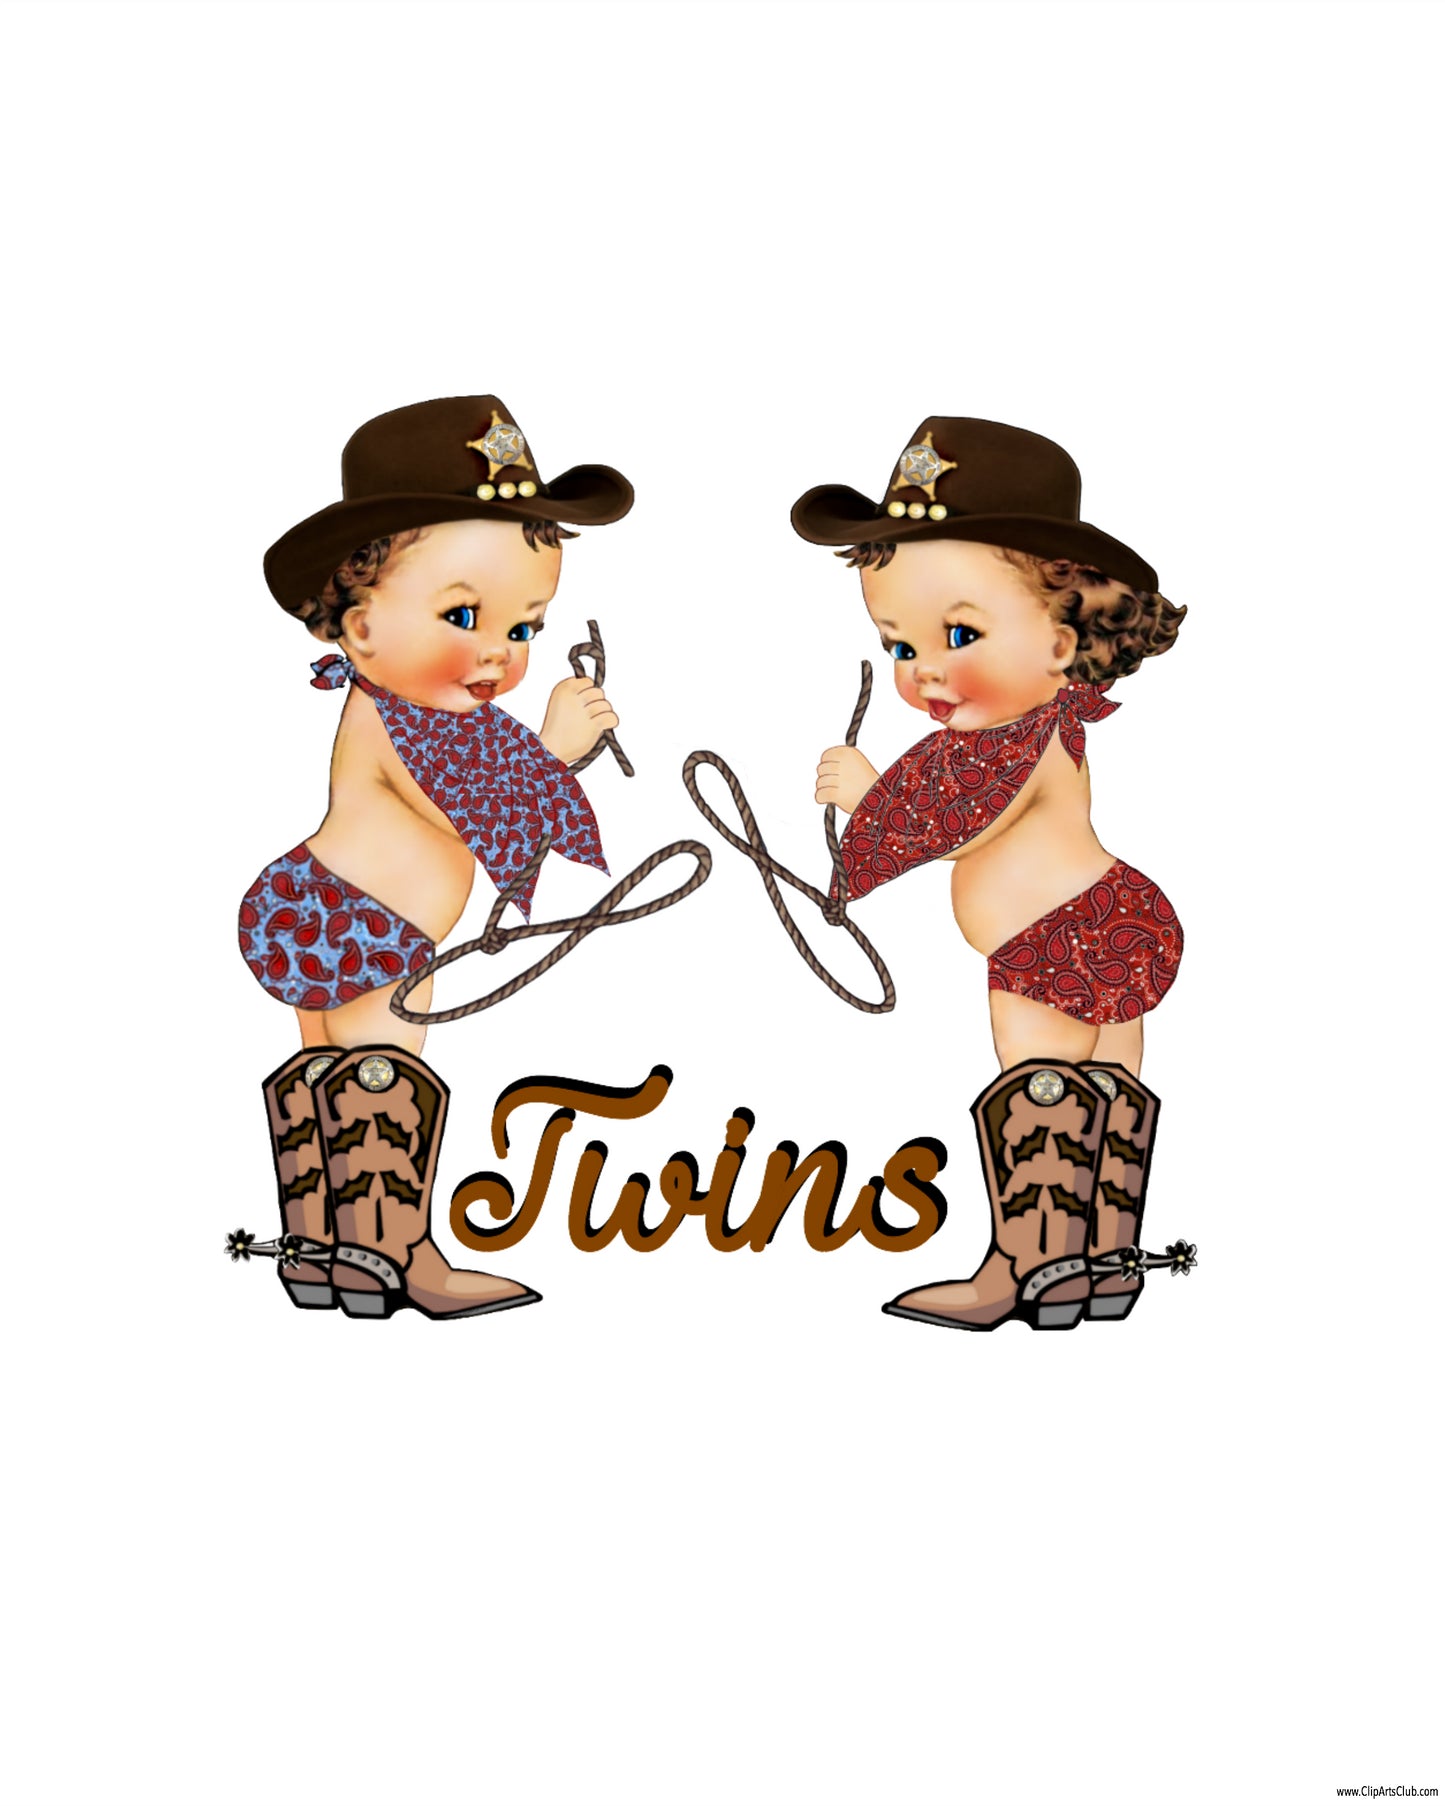 Baby Twins 8x10 Print - Baby Cowgirl & Cowboy